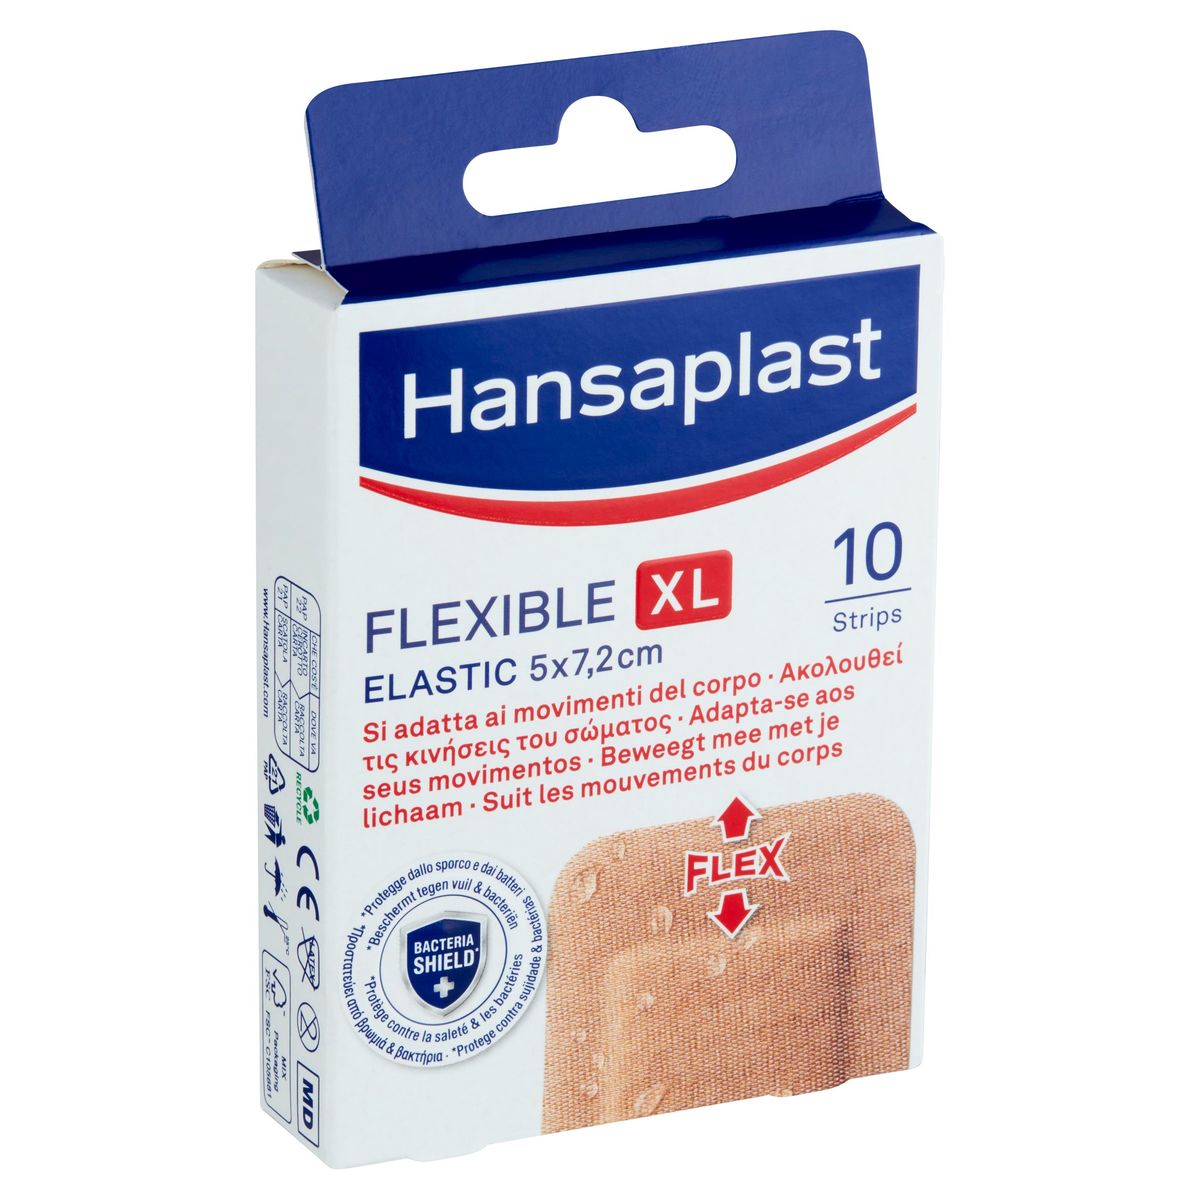 Hansaplast Flexible XL Elastic 10 Strips